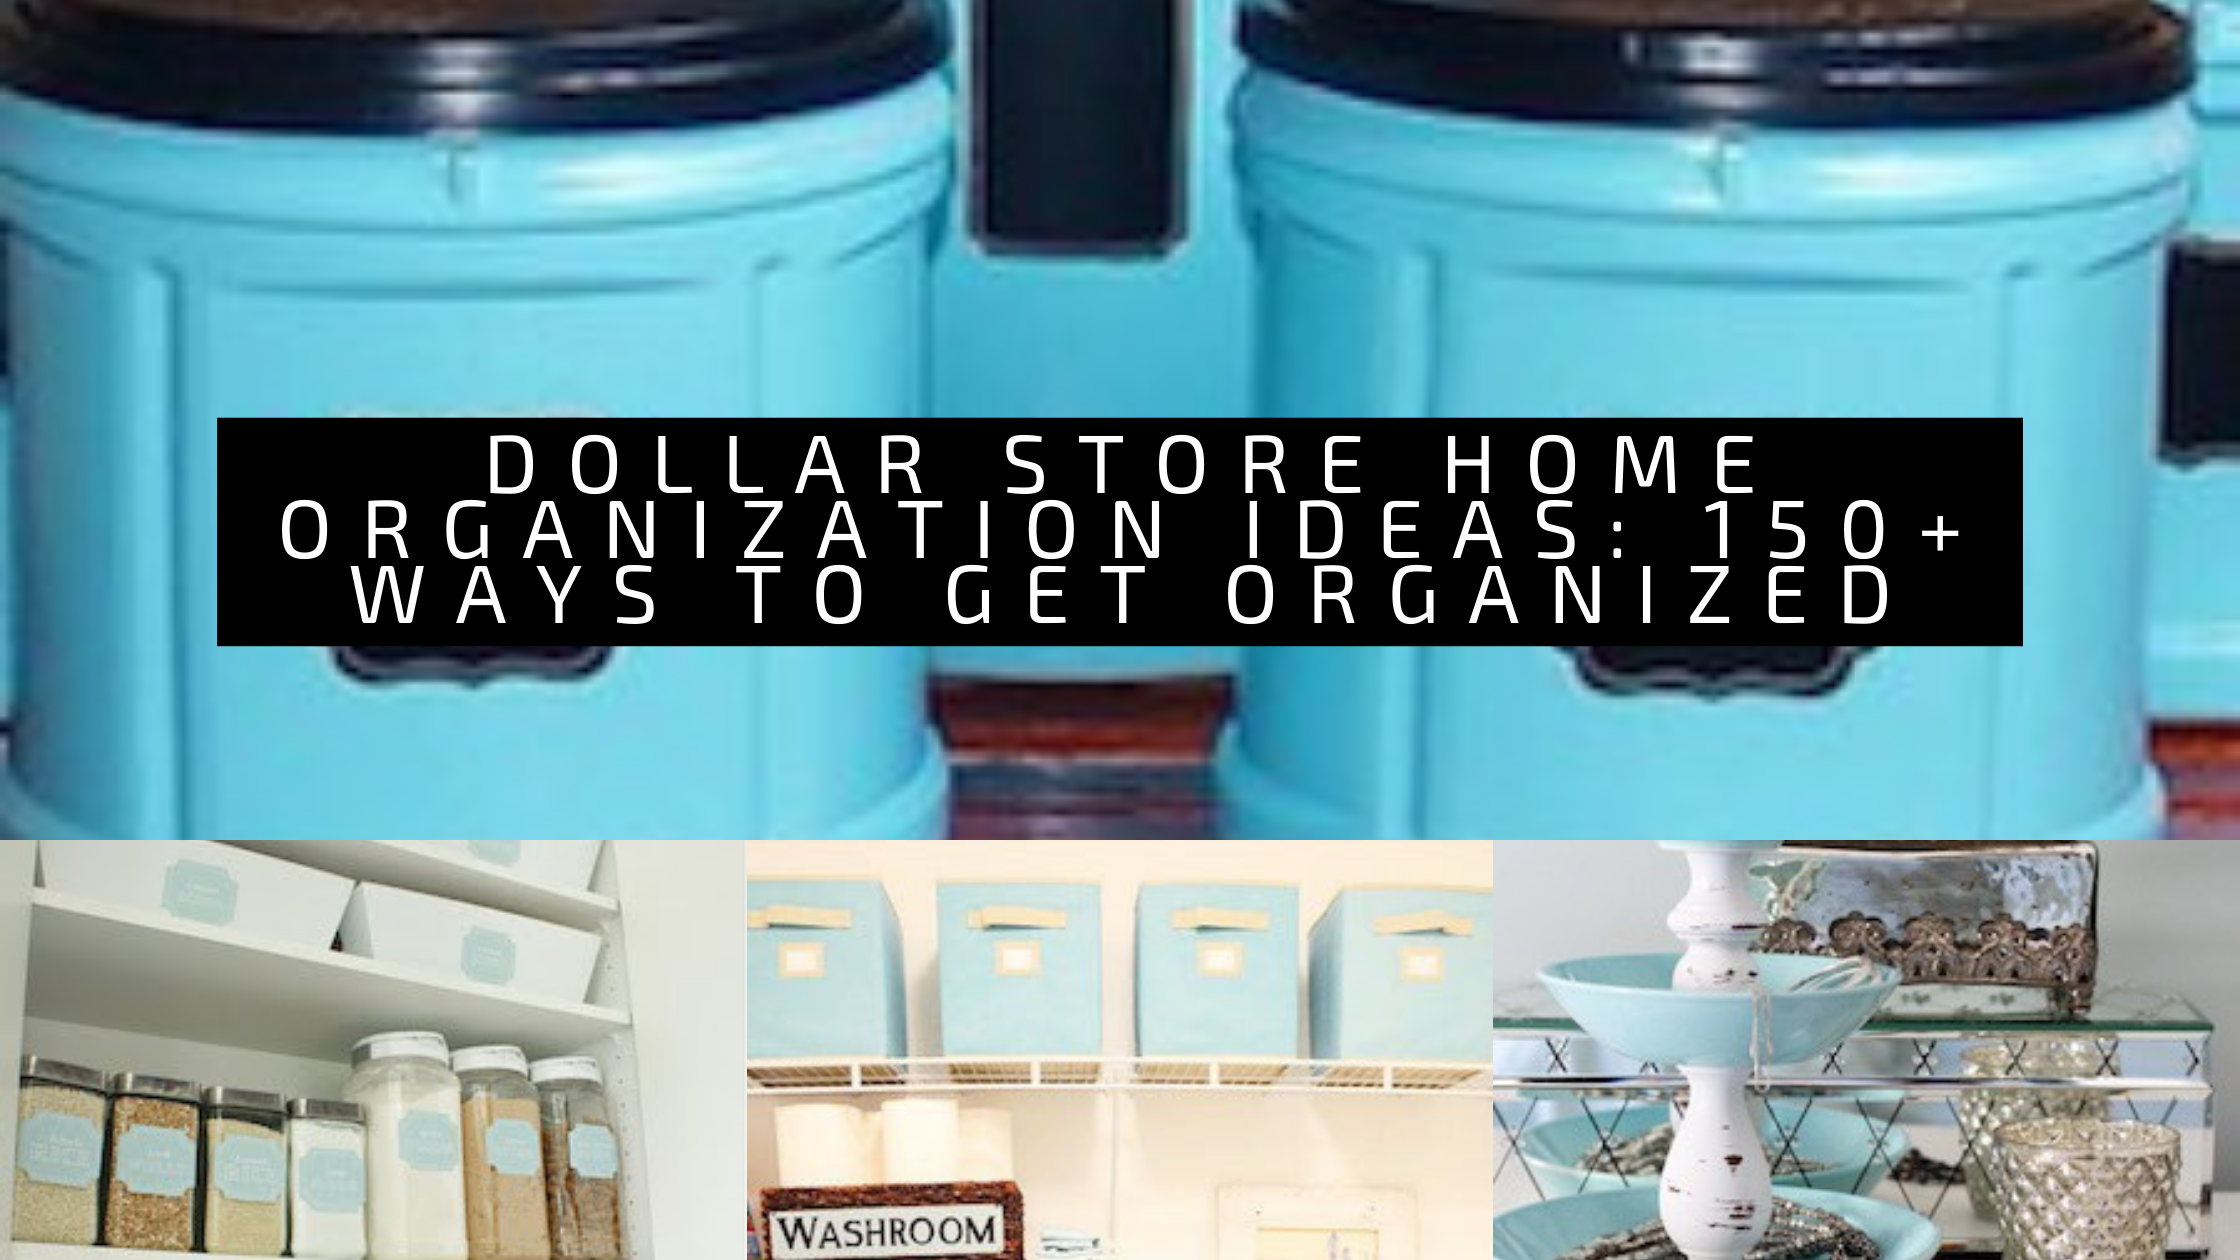 Dollar Store Home Organization Ideas: 150+ Ways to Get Organized 28